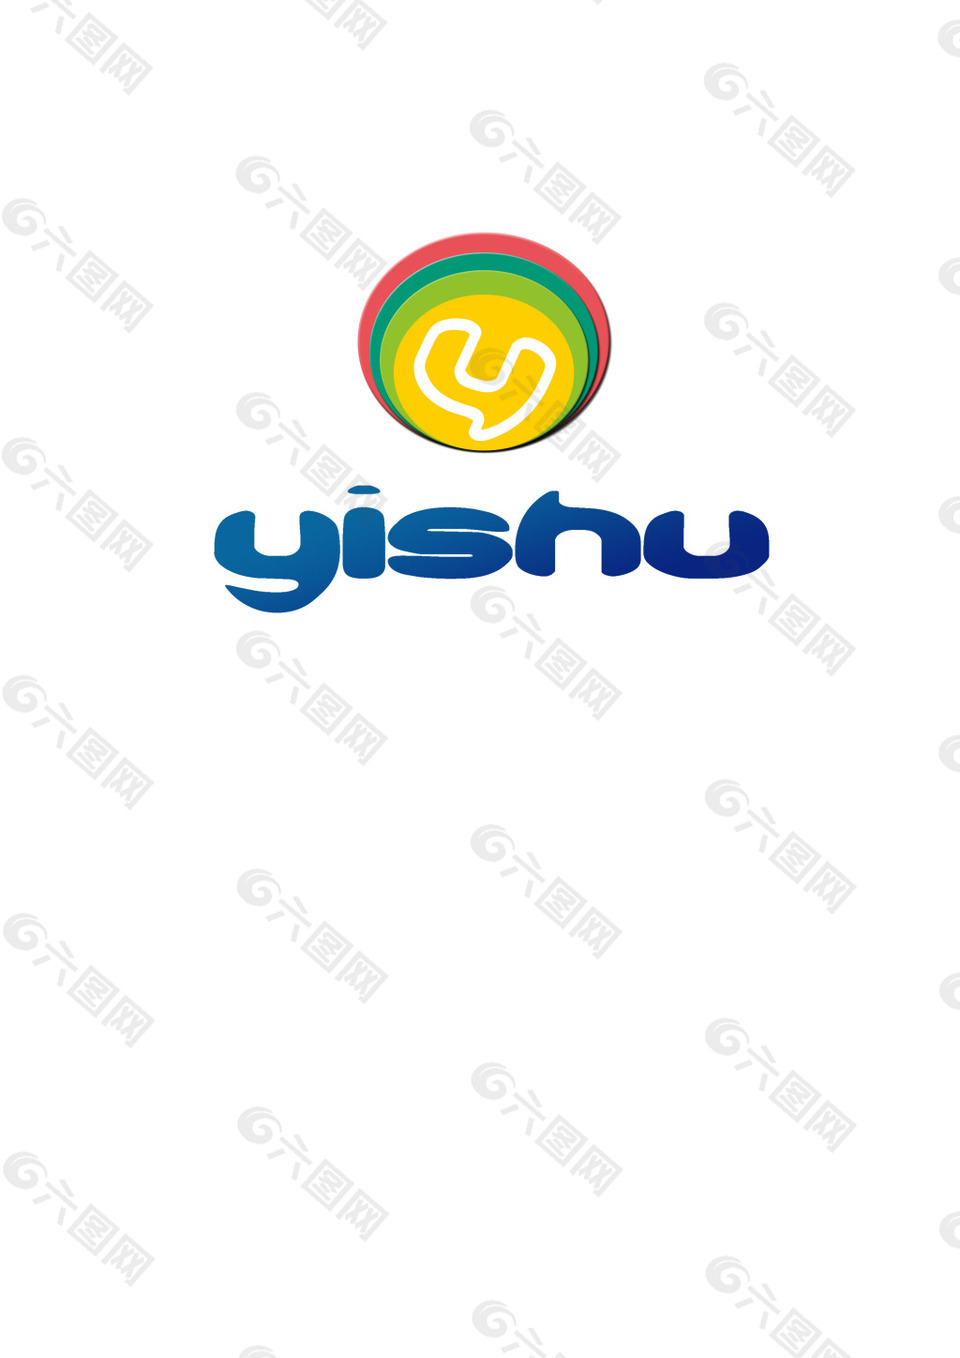 立体炫彩logo设计